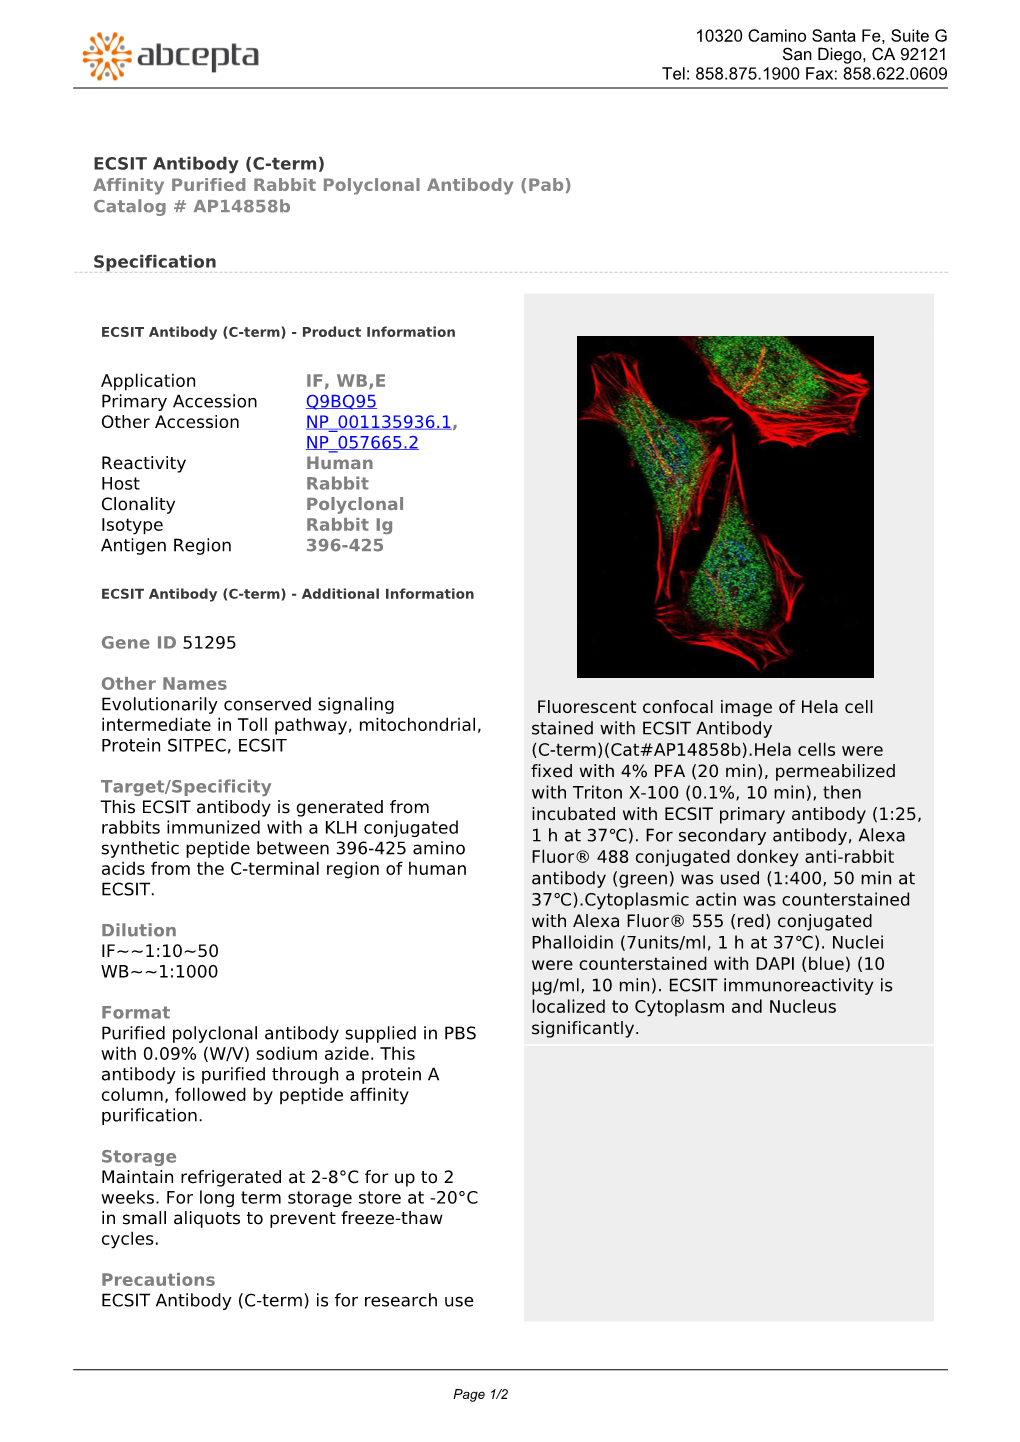 ECSIT Antibody (C-Term) Affinity Purified Rabbit Polyclonal Antibody (Pab) Catalog # Ap14858b